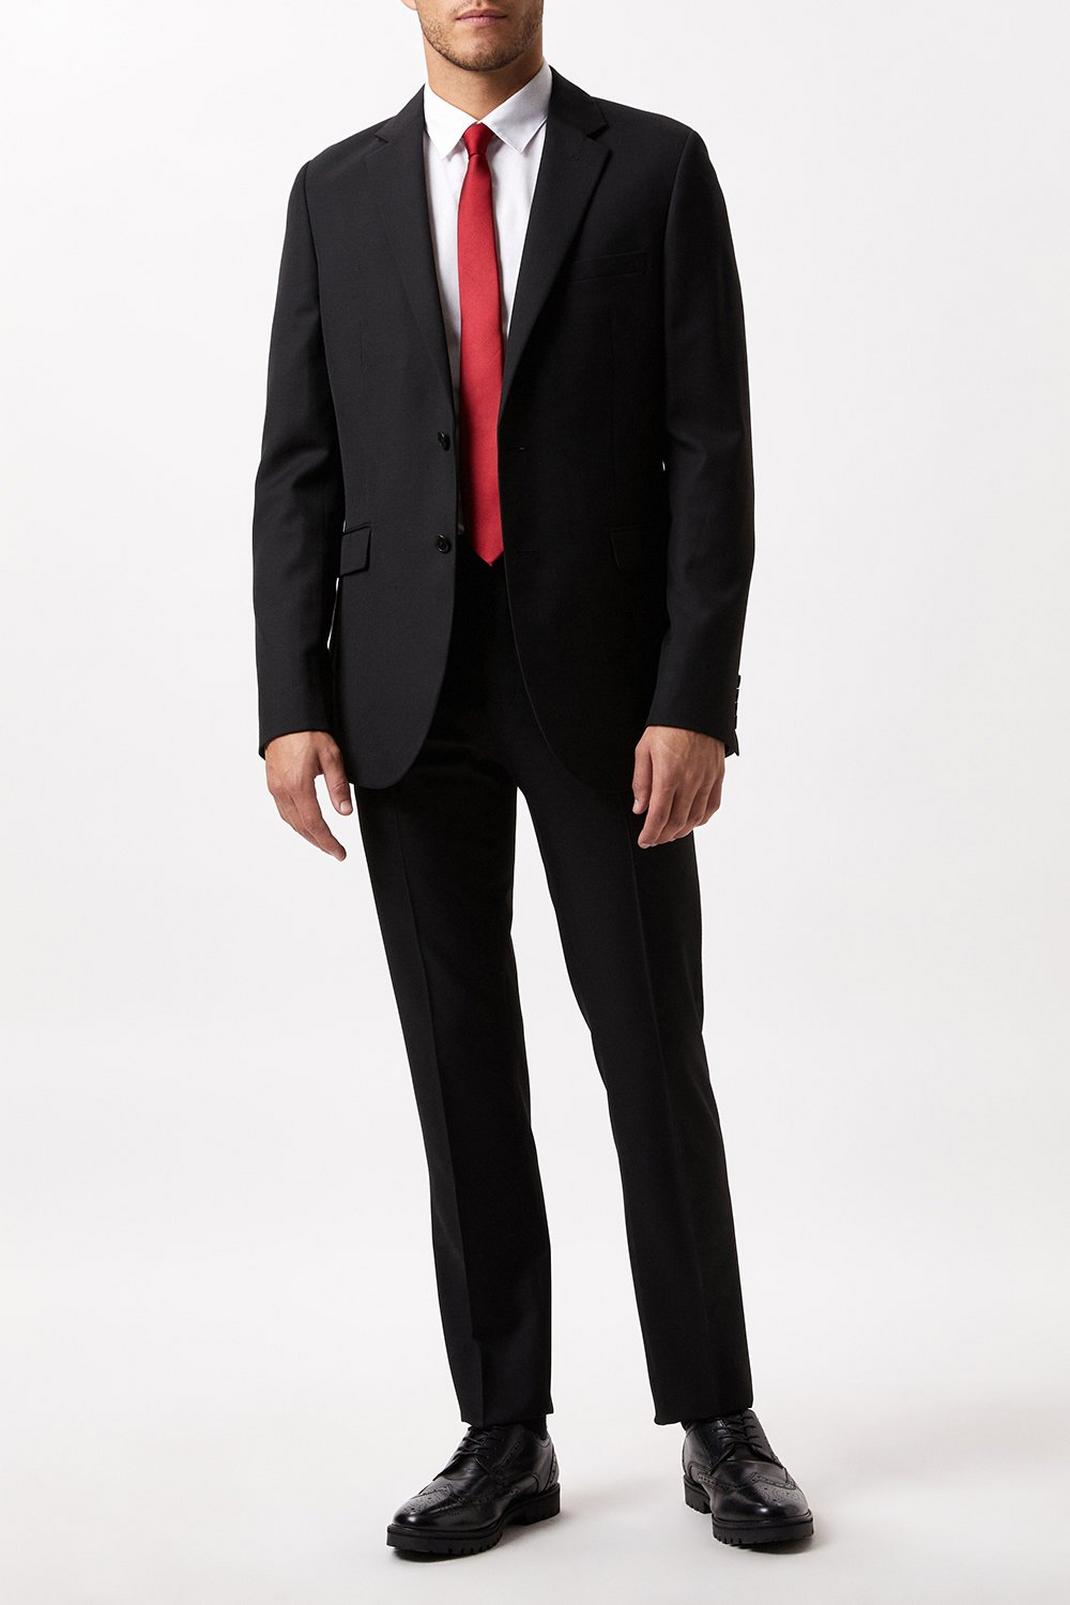 details Druif leeuwerik Slim Fit Black Twill Suit Jacket | Burton UK